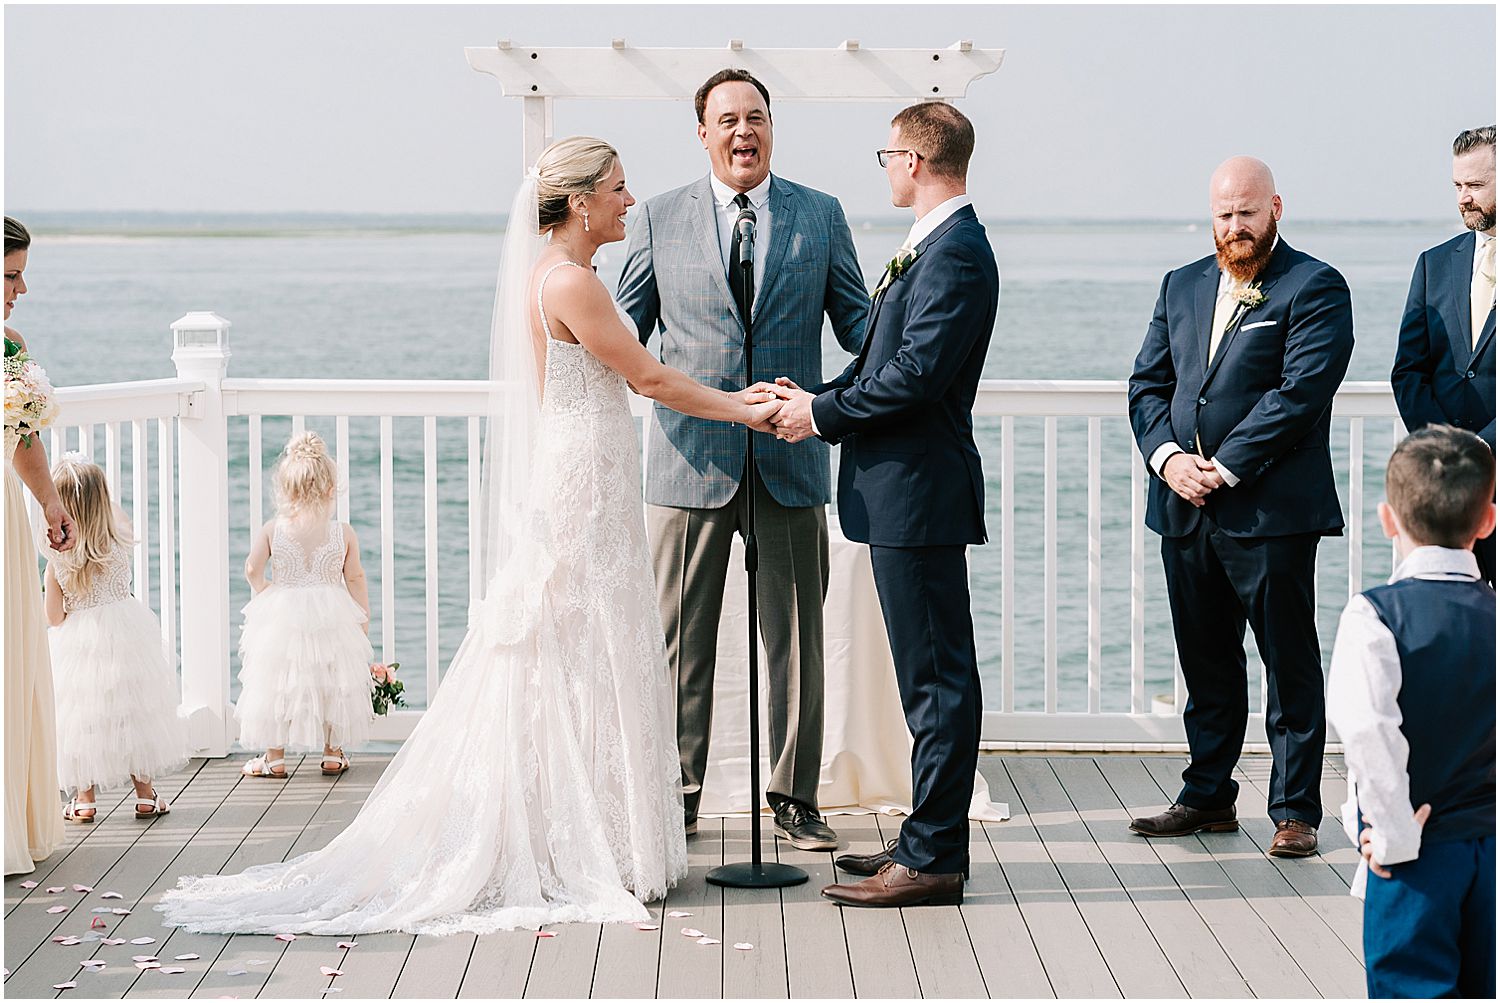 Ceremony image at this Avalon Yacht Club wedding